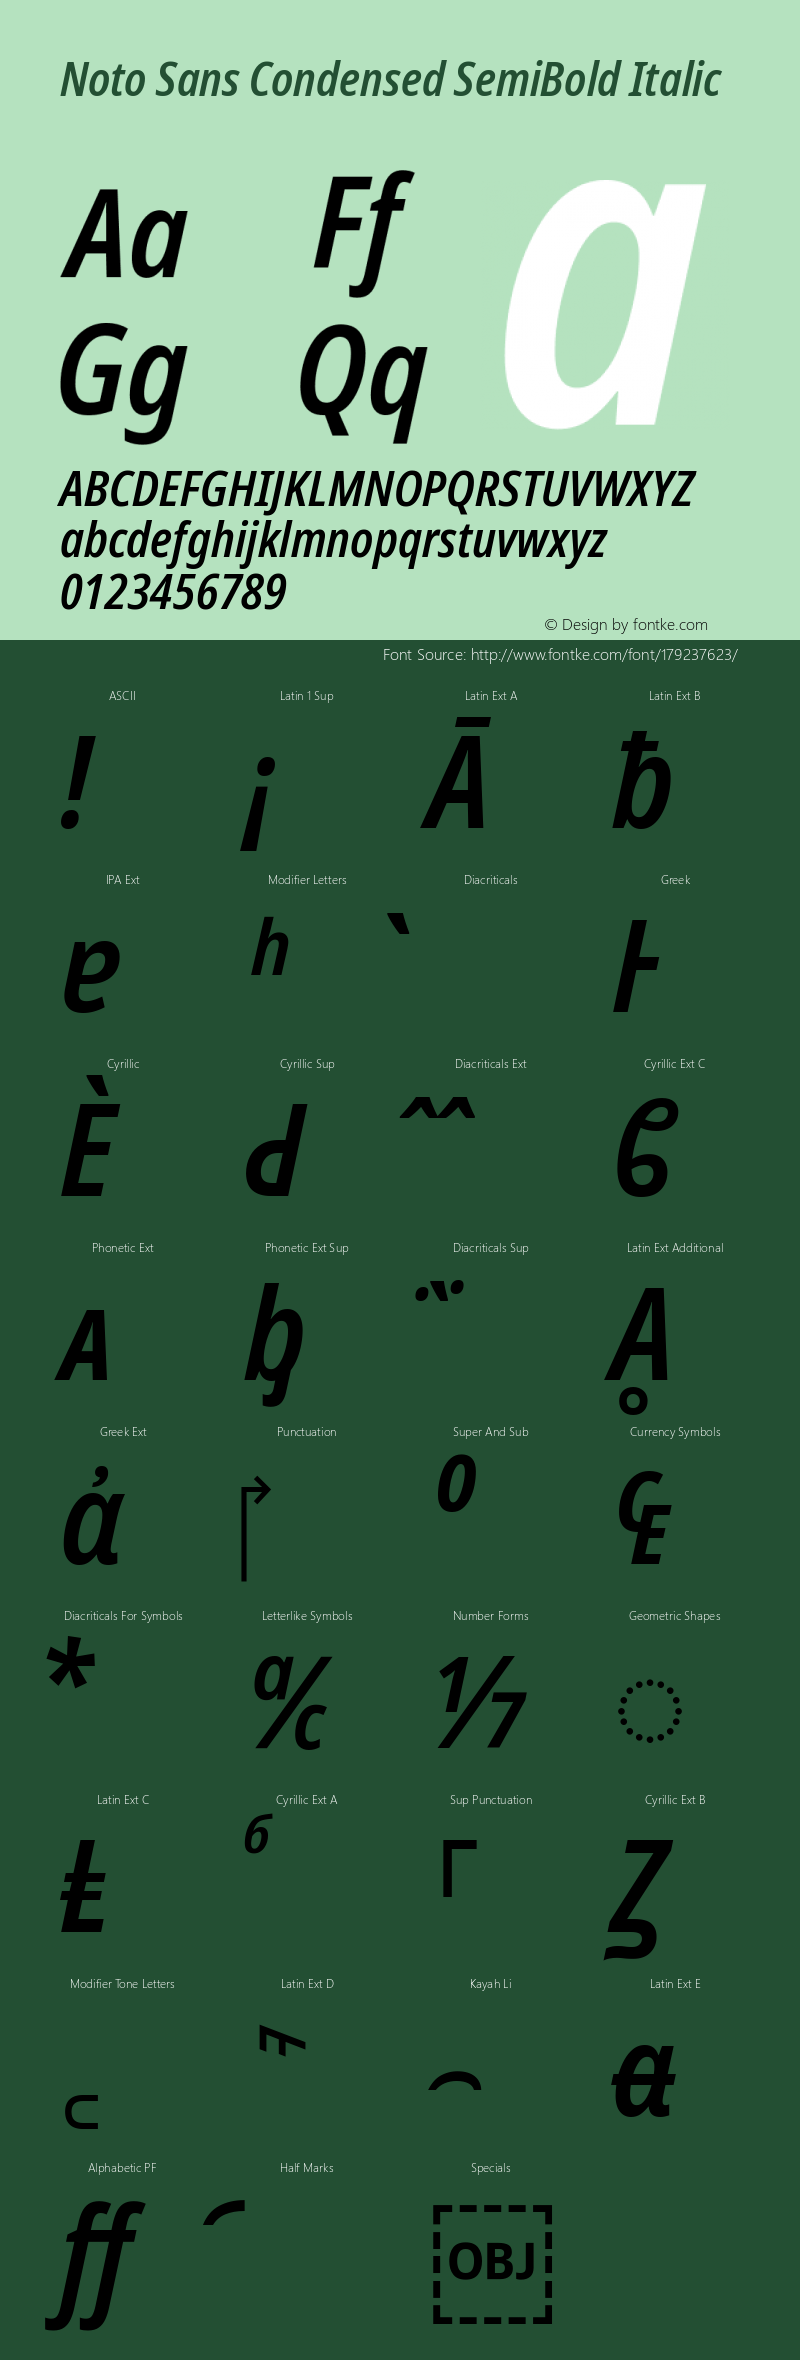 Noto Sans Condensed SemiBold Italic Version 2.004; ttfautohint (v1.8.3) -l 8 -r 50 -G 200 -x 14 -D latn -f none -a qsq -X 